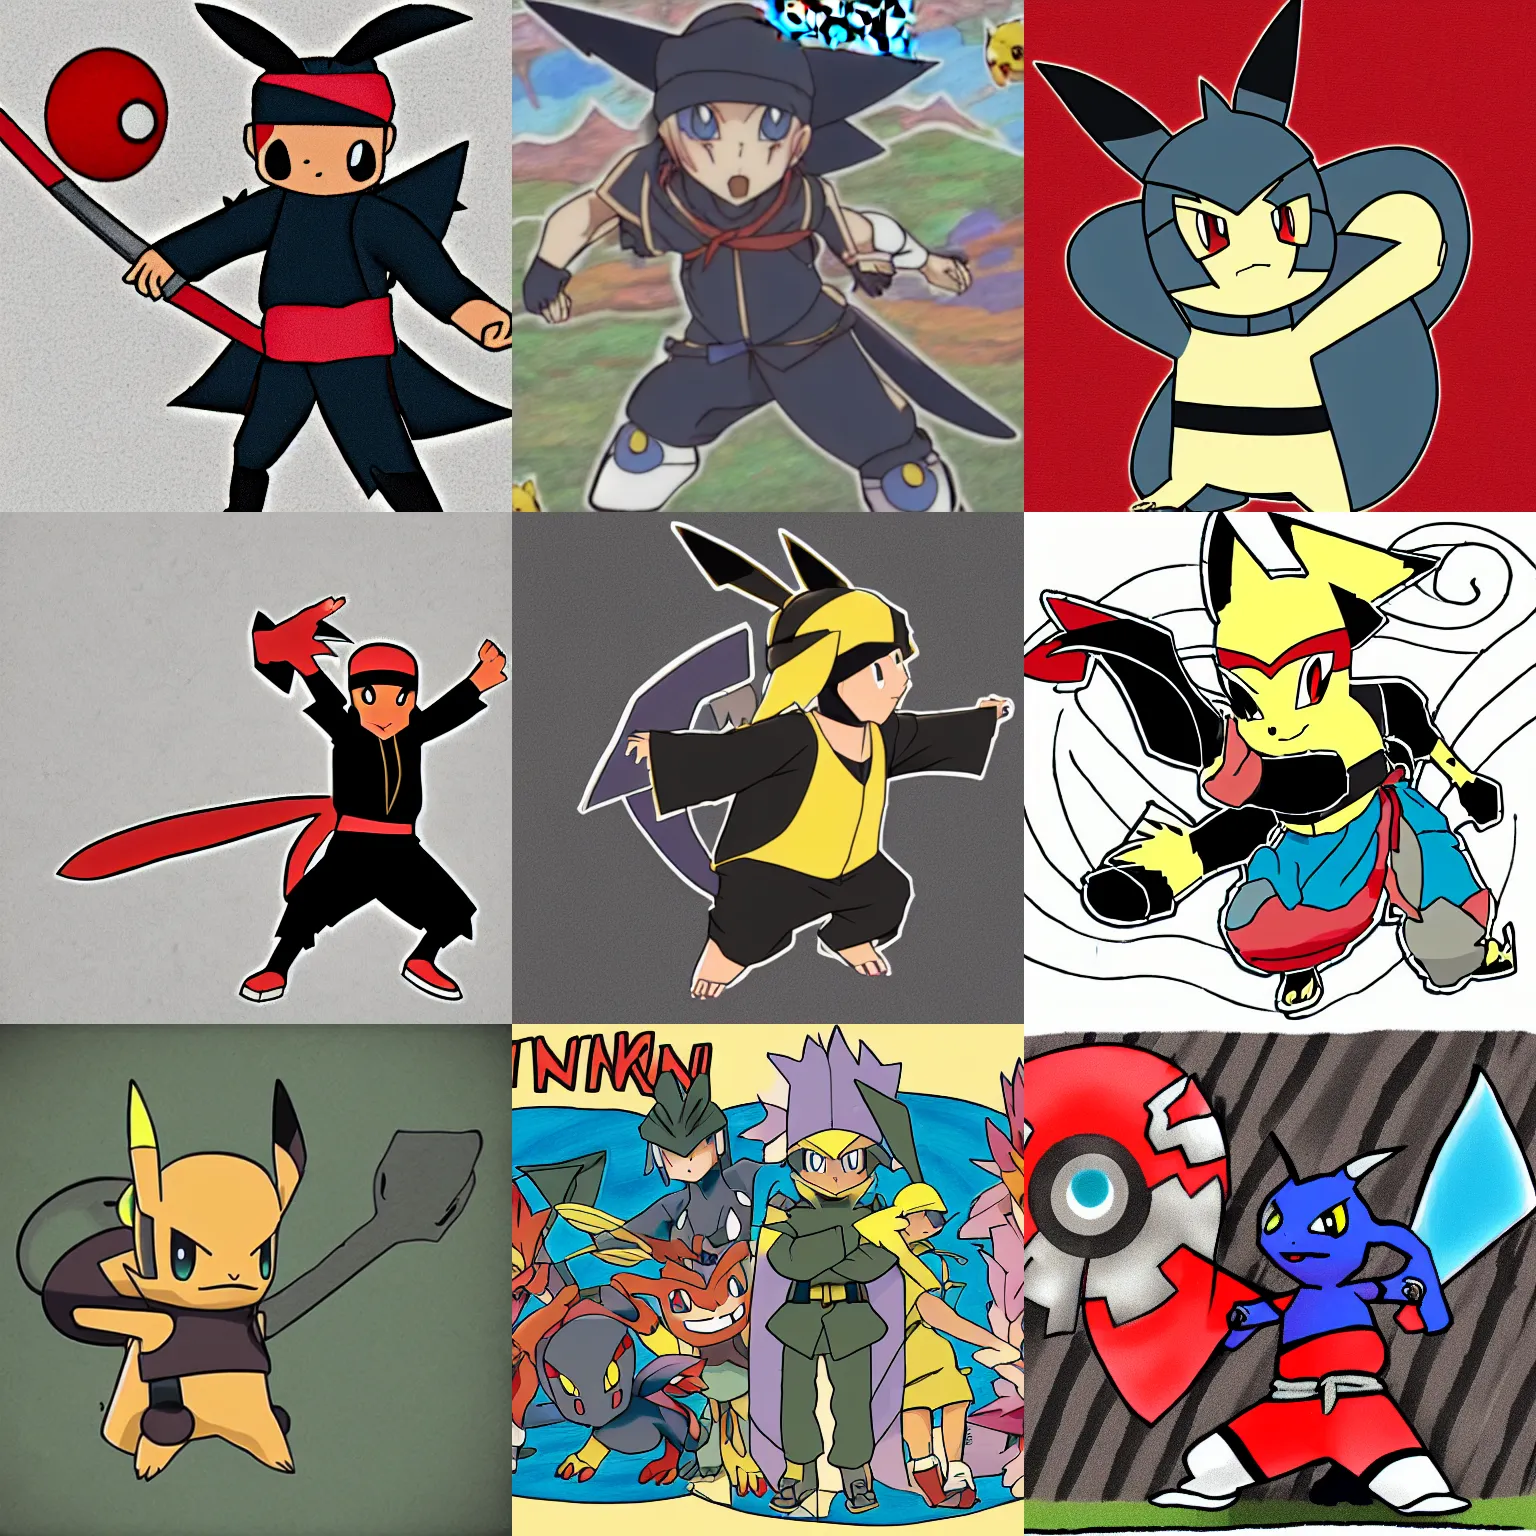 Prompt: a cartoon of a Pokemon ninja